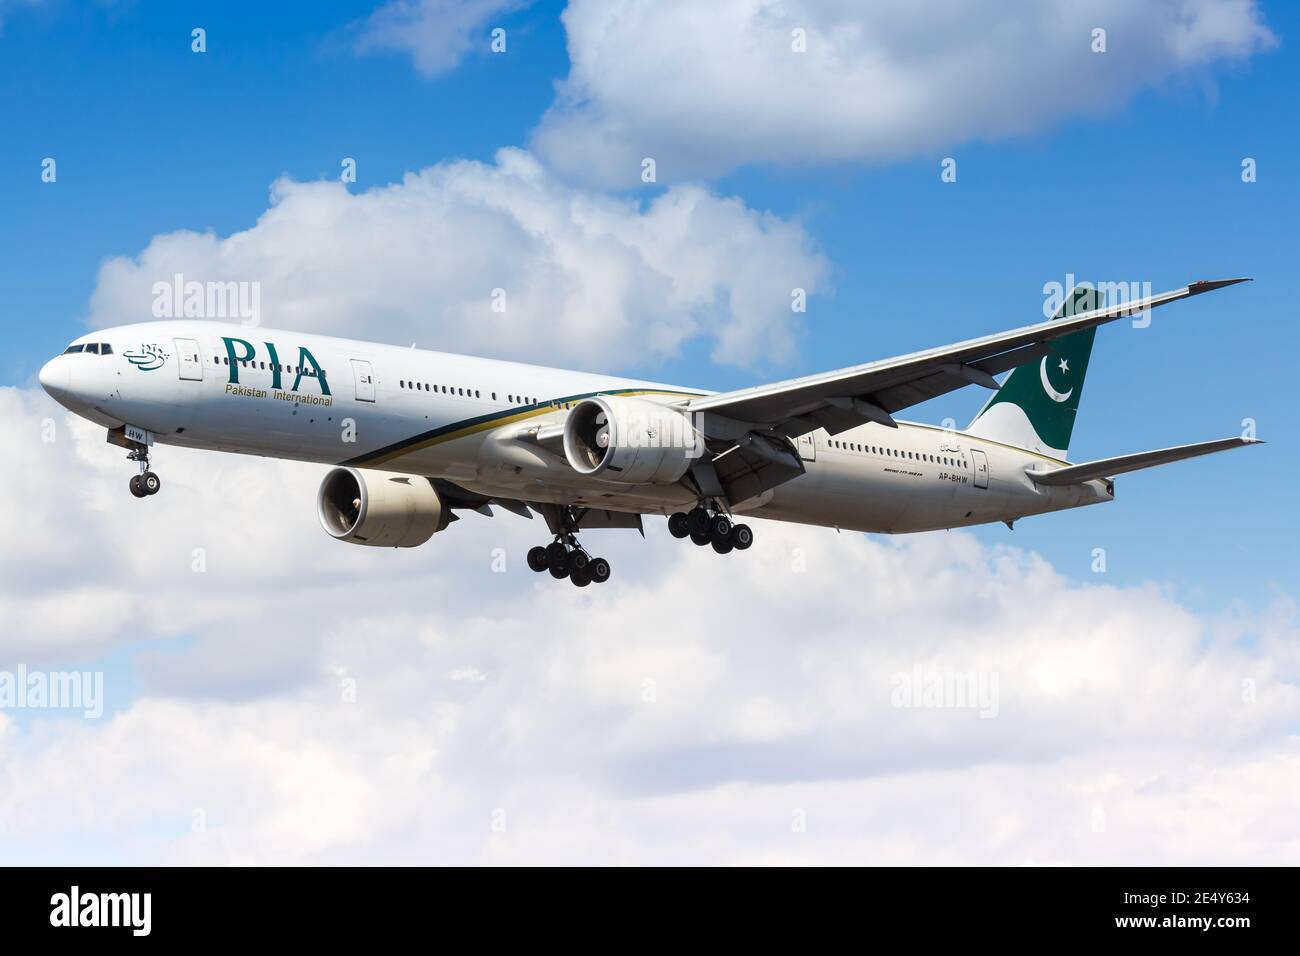 London, United Kingdom - July 31, 2018: PIA Pakistan International Boeing 777 airplane at London Heathrow airport (LHR) in the United Kingdom. Stock Photo